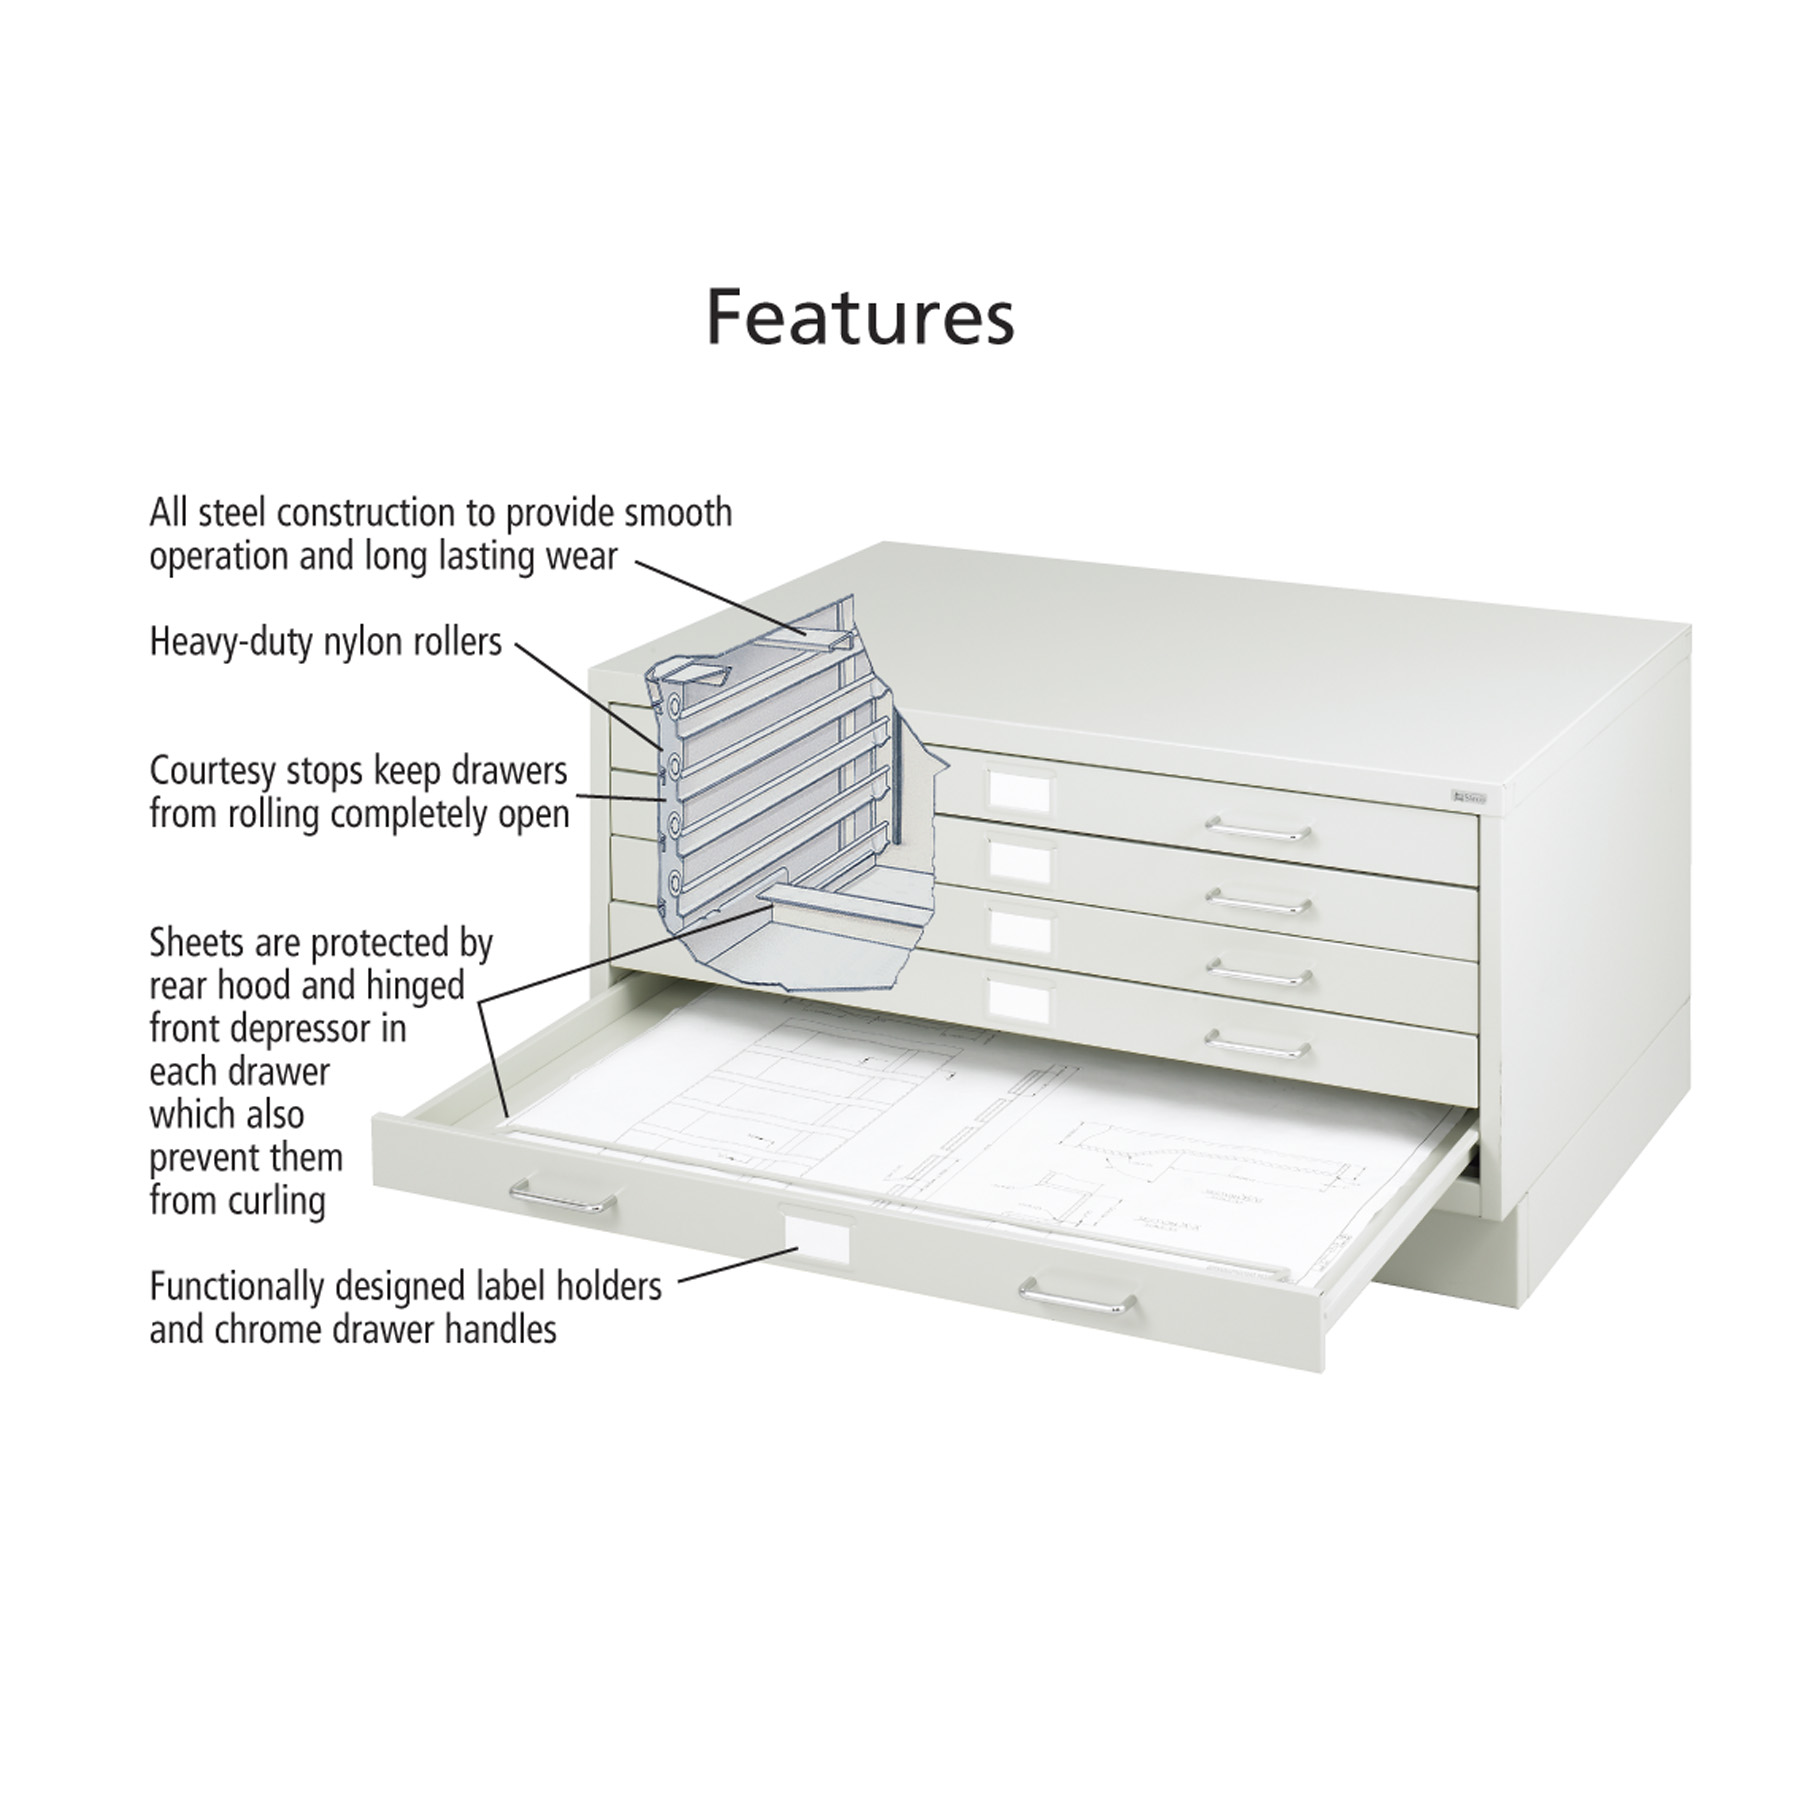 Safco Steel Flat File Cabinet Bases